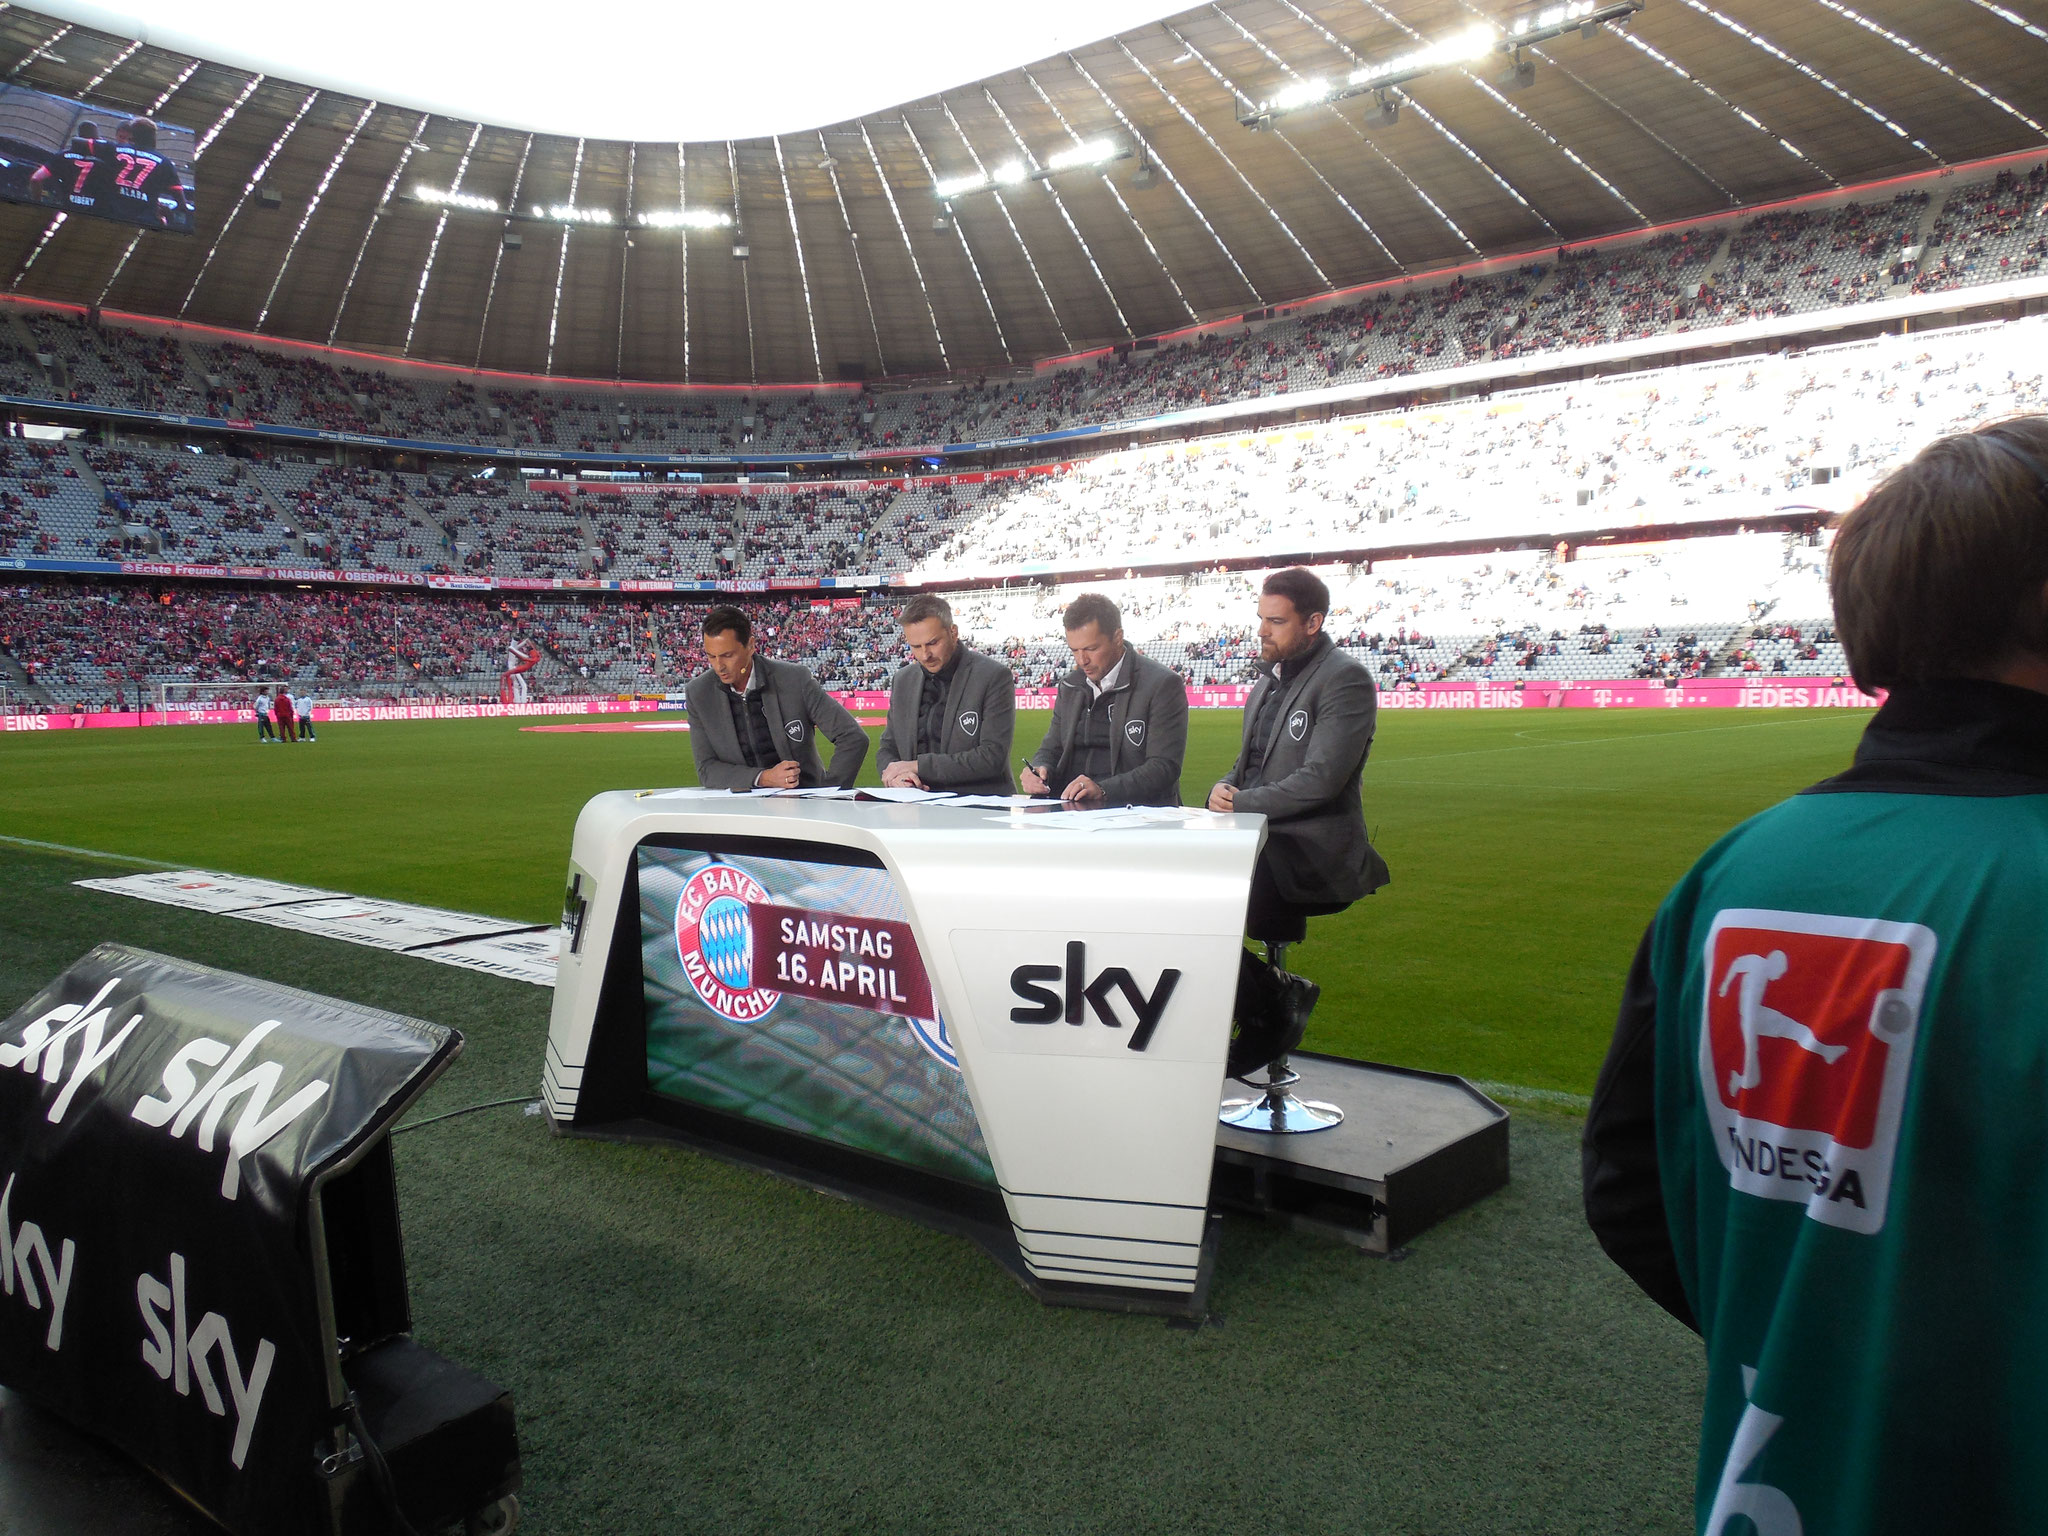 Allianz Arena FC Bayern LED Screen Sky Topspiel Tisch 